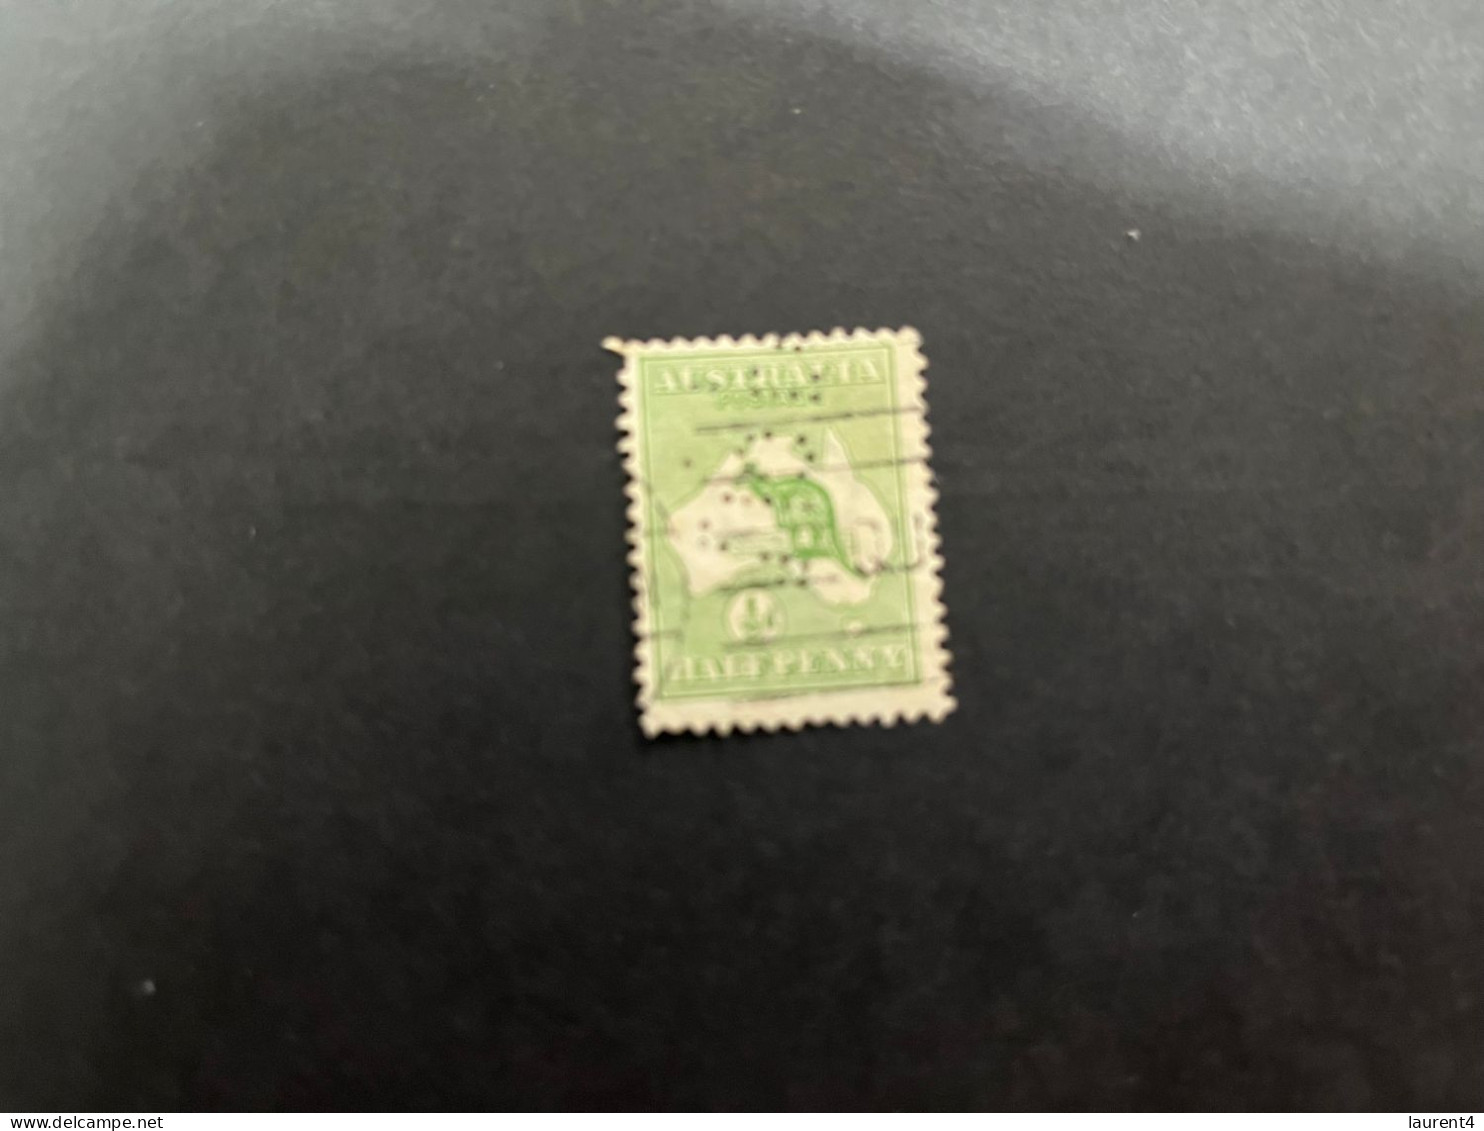 23-3-2024 (stamp) Kangaroo & Map Australia Perforated Pair Stamps / Perfins Stamps / Timbres Perfinés (as Seen On Scan) - Perforadas